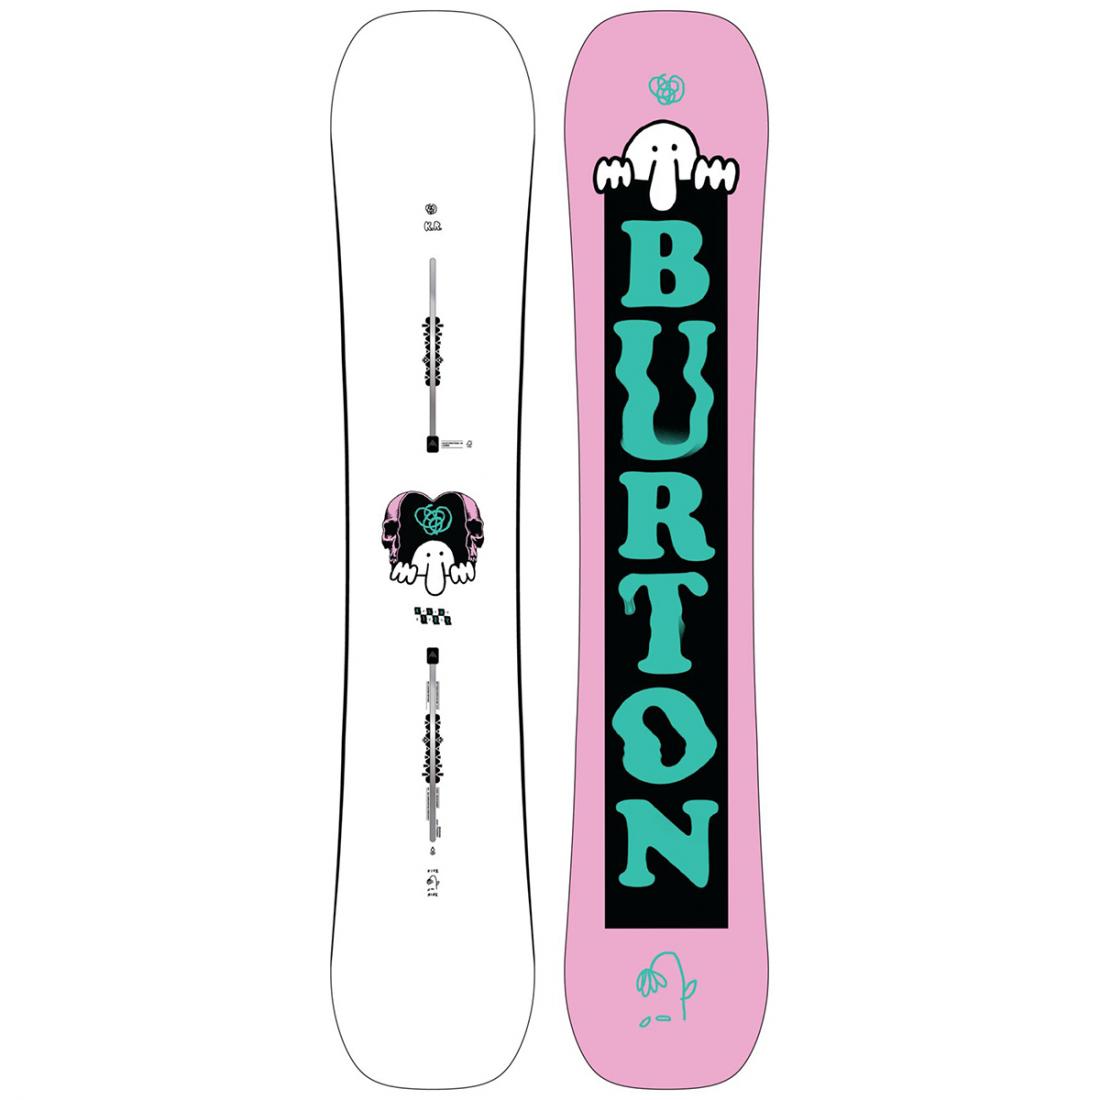 Сноуборд KILROY TWIN Burton, цвет розовый, размер 152